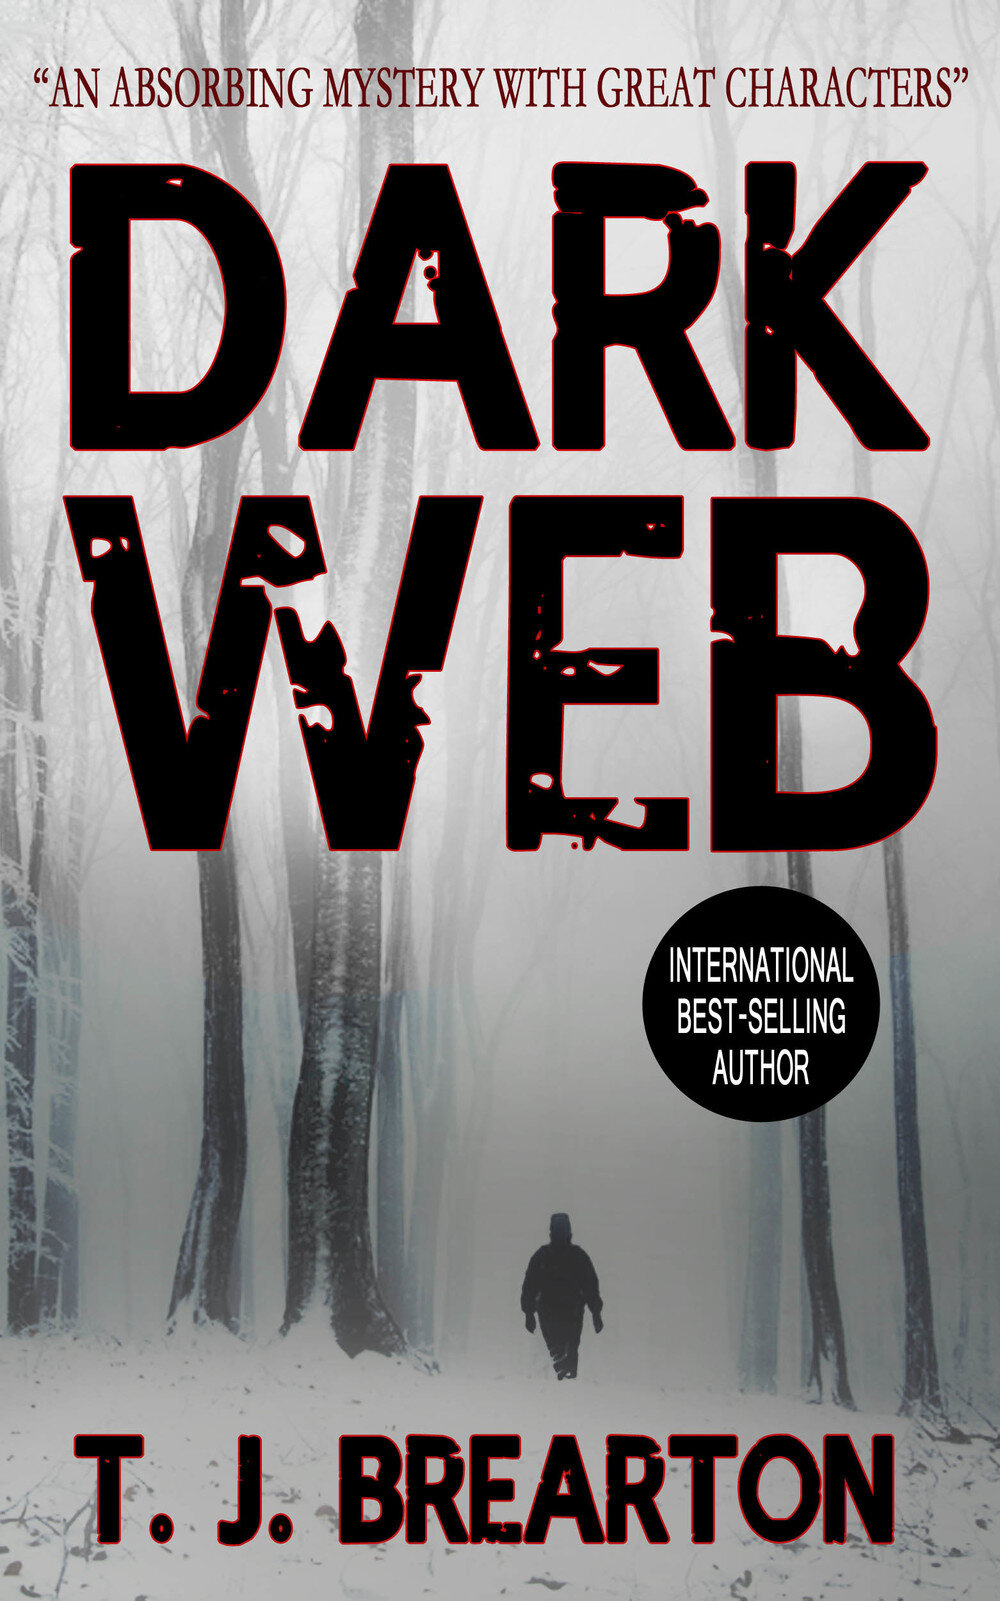 DARK+WEB+COVER.jpg